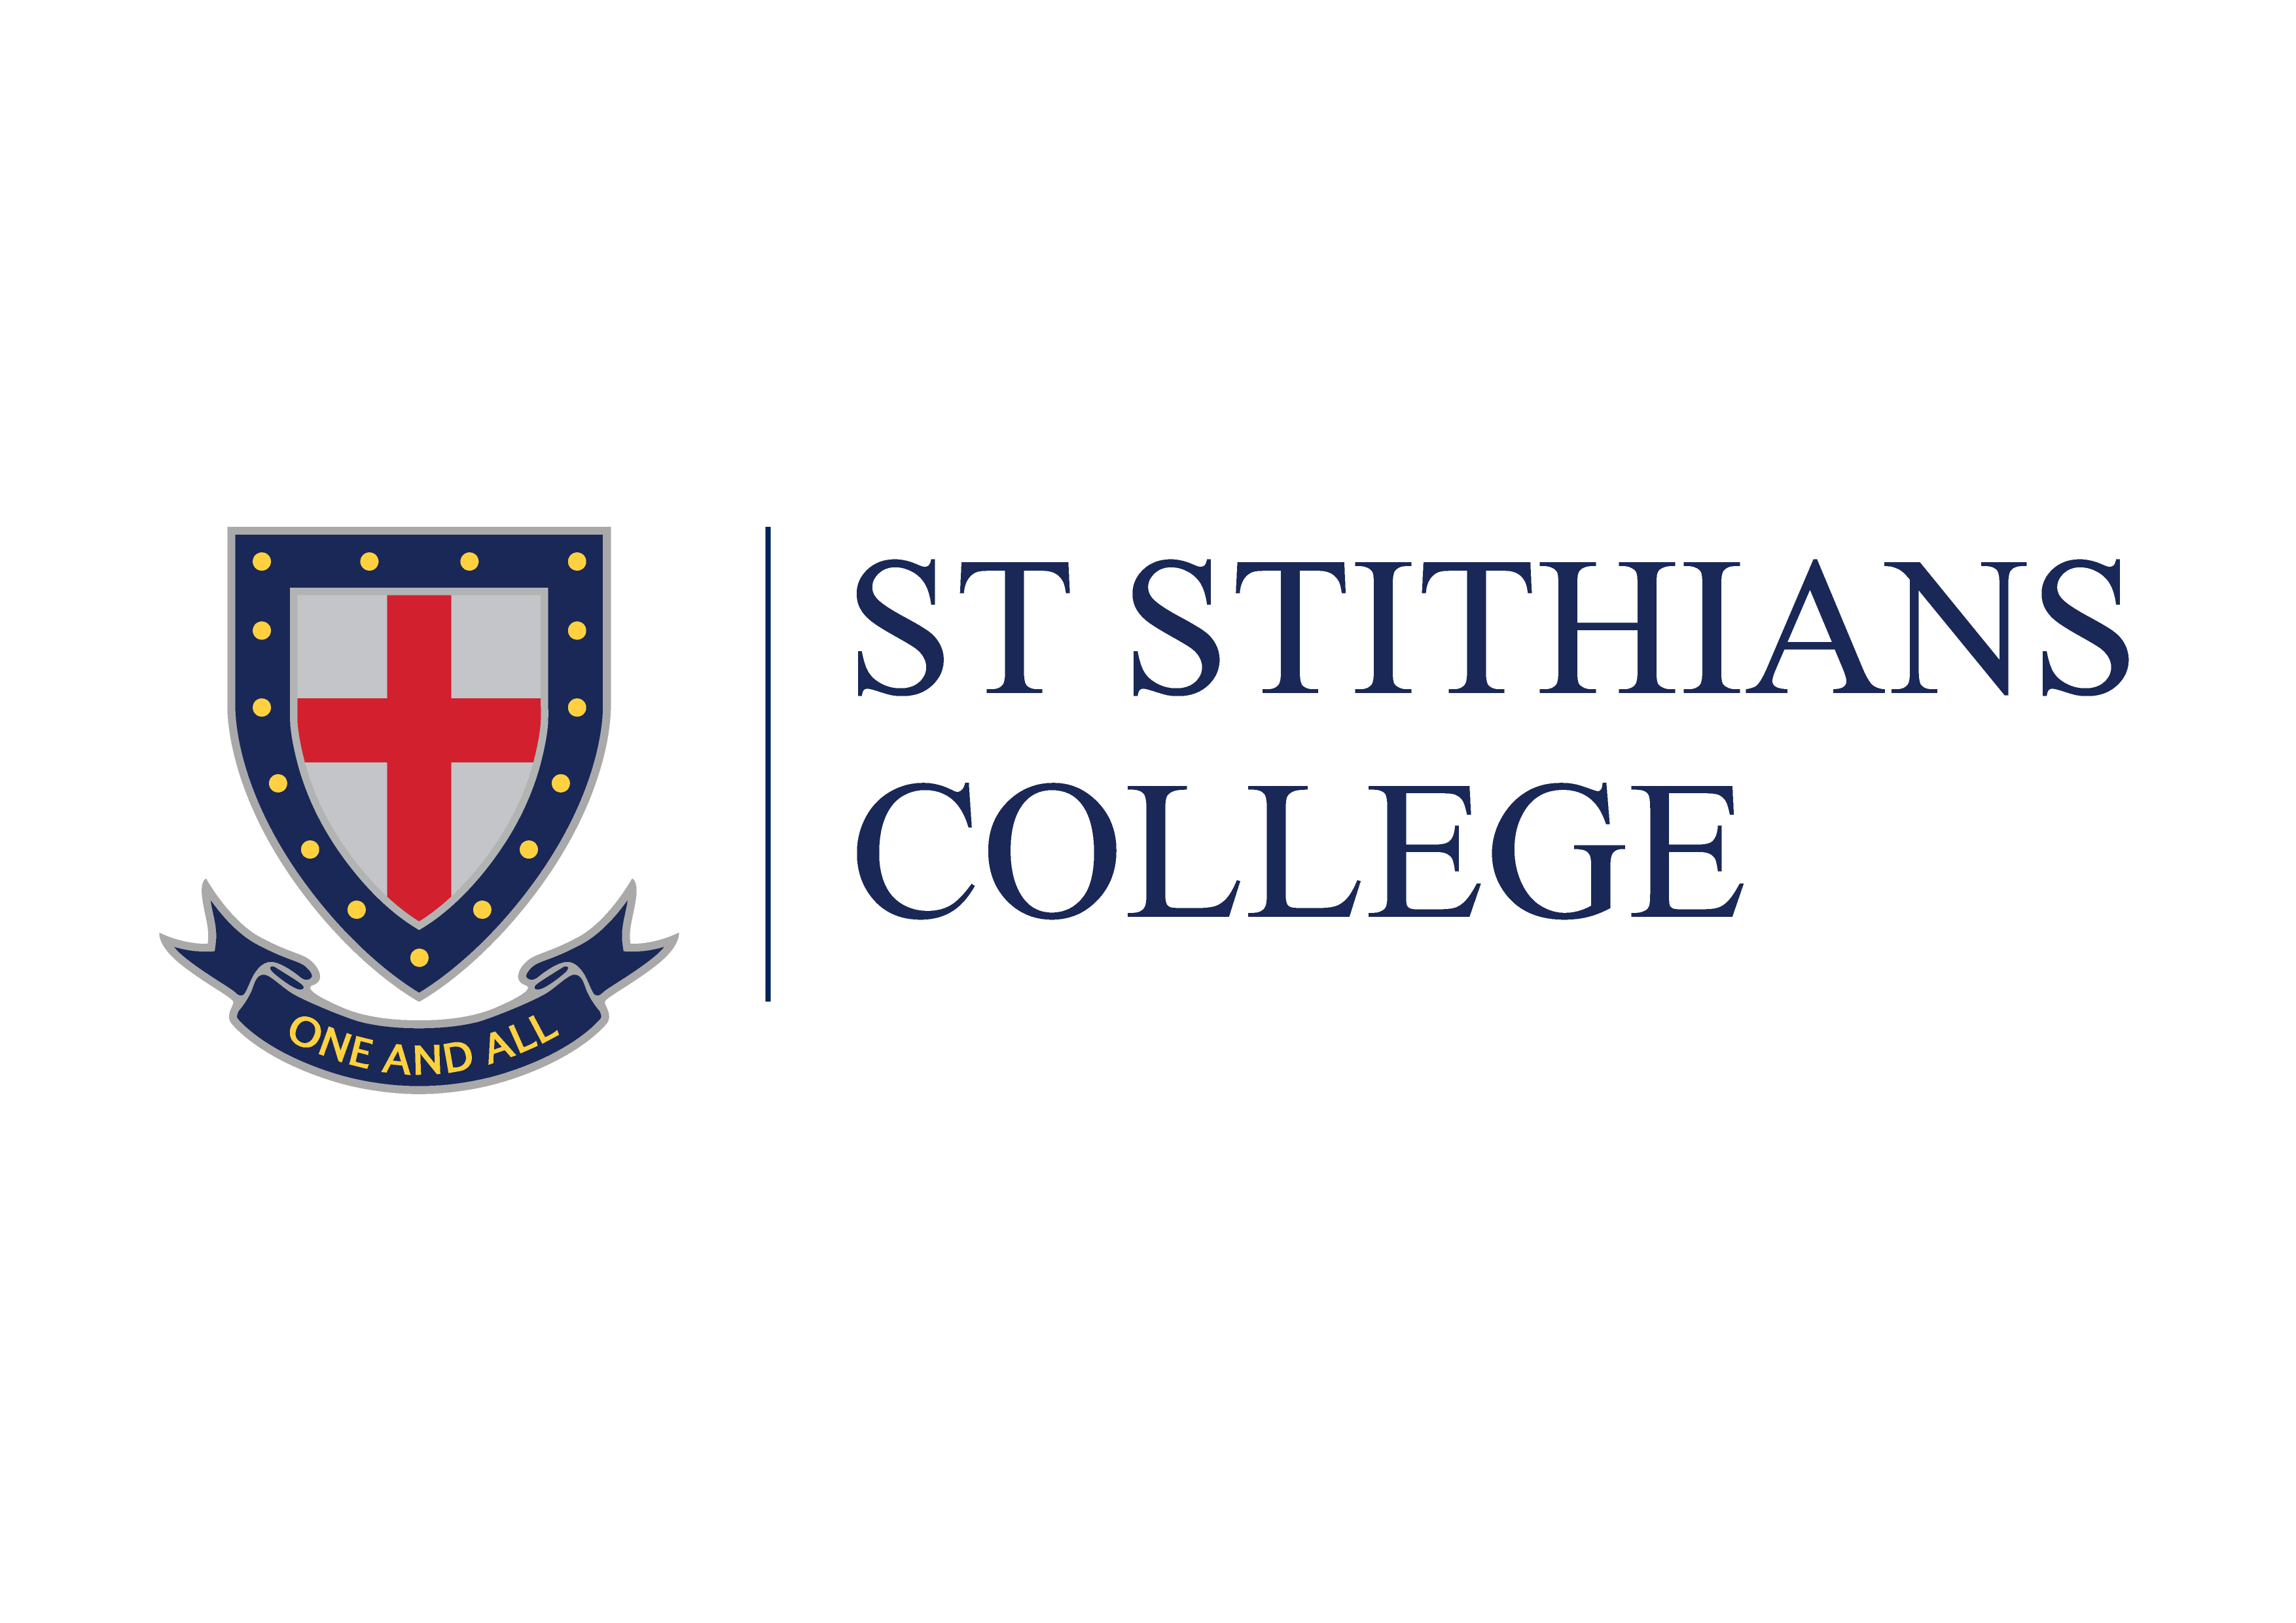 St Stithians